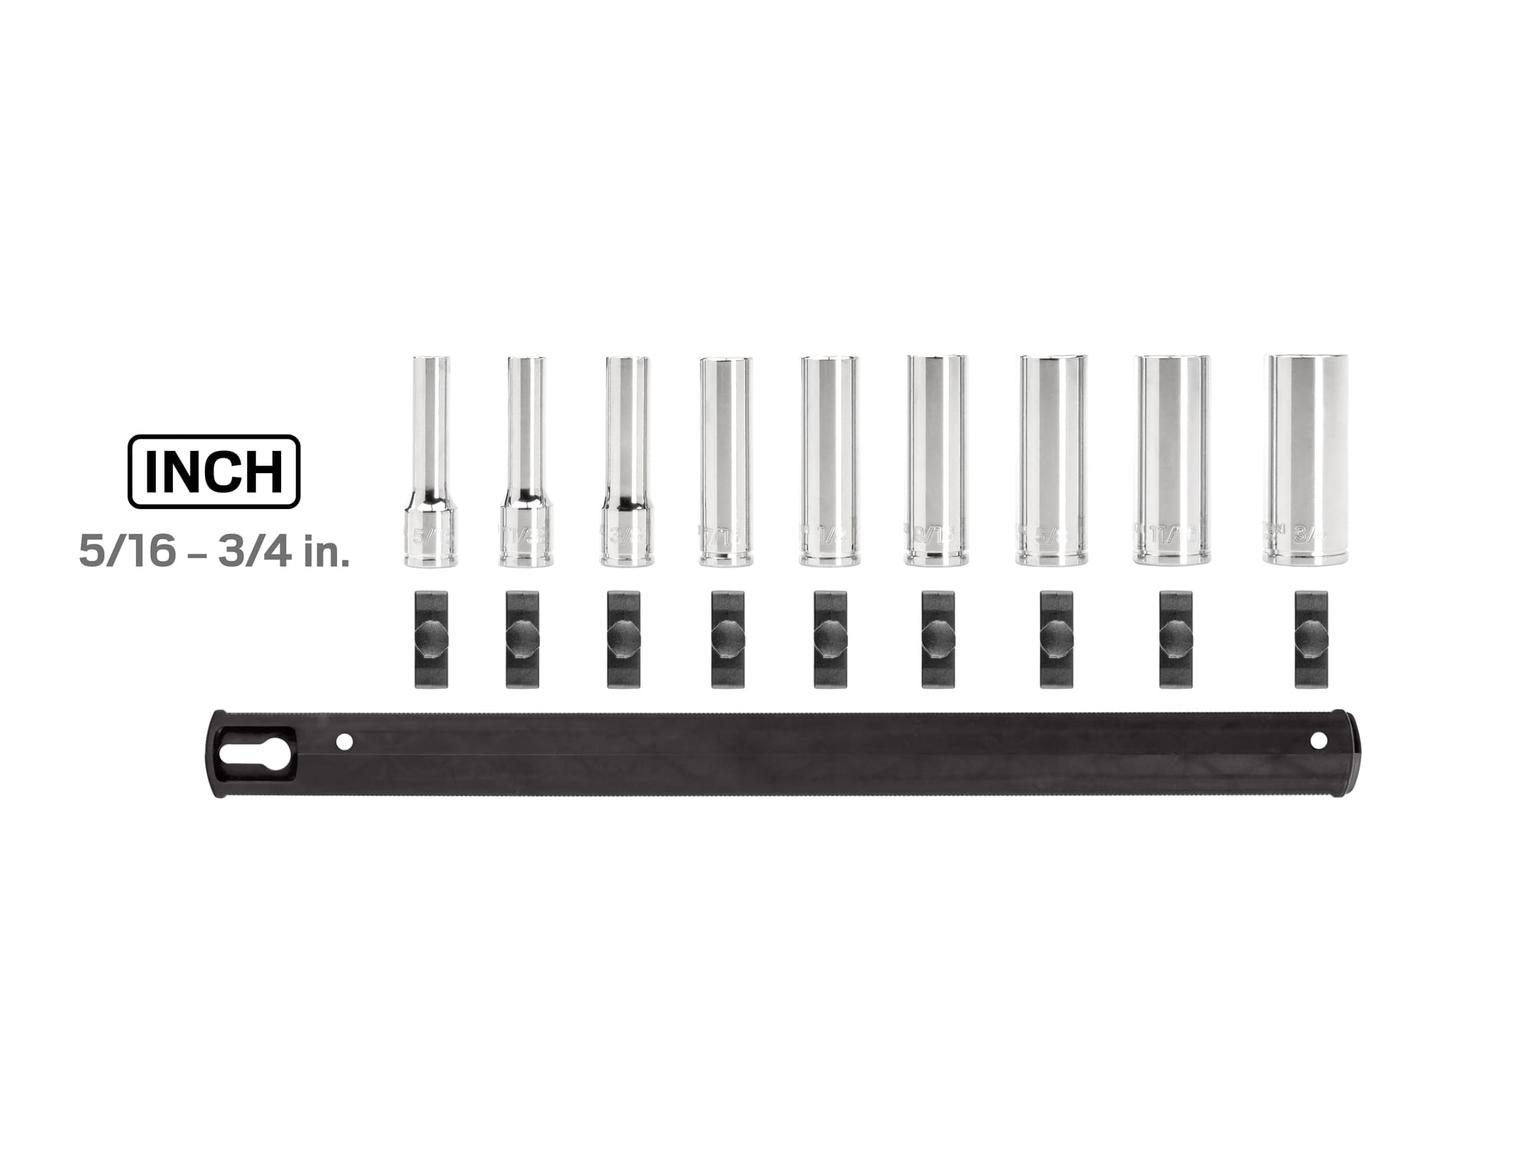 TEKTON SHD91107-T 3/8 Inch Drive Deep 12-Point Socket Set with Rail, 9-Piece (5/16-3/4 in.)